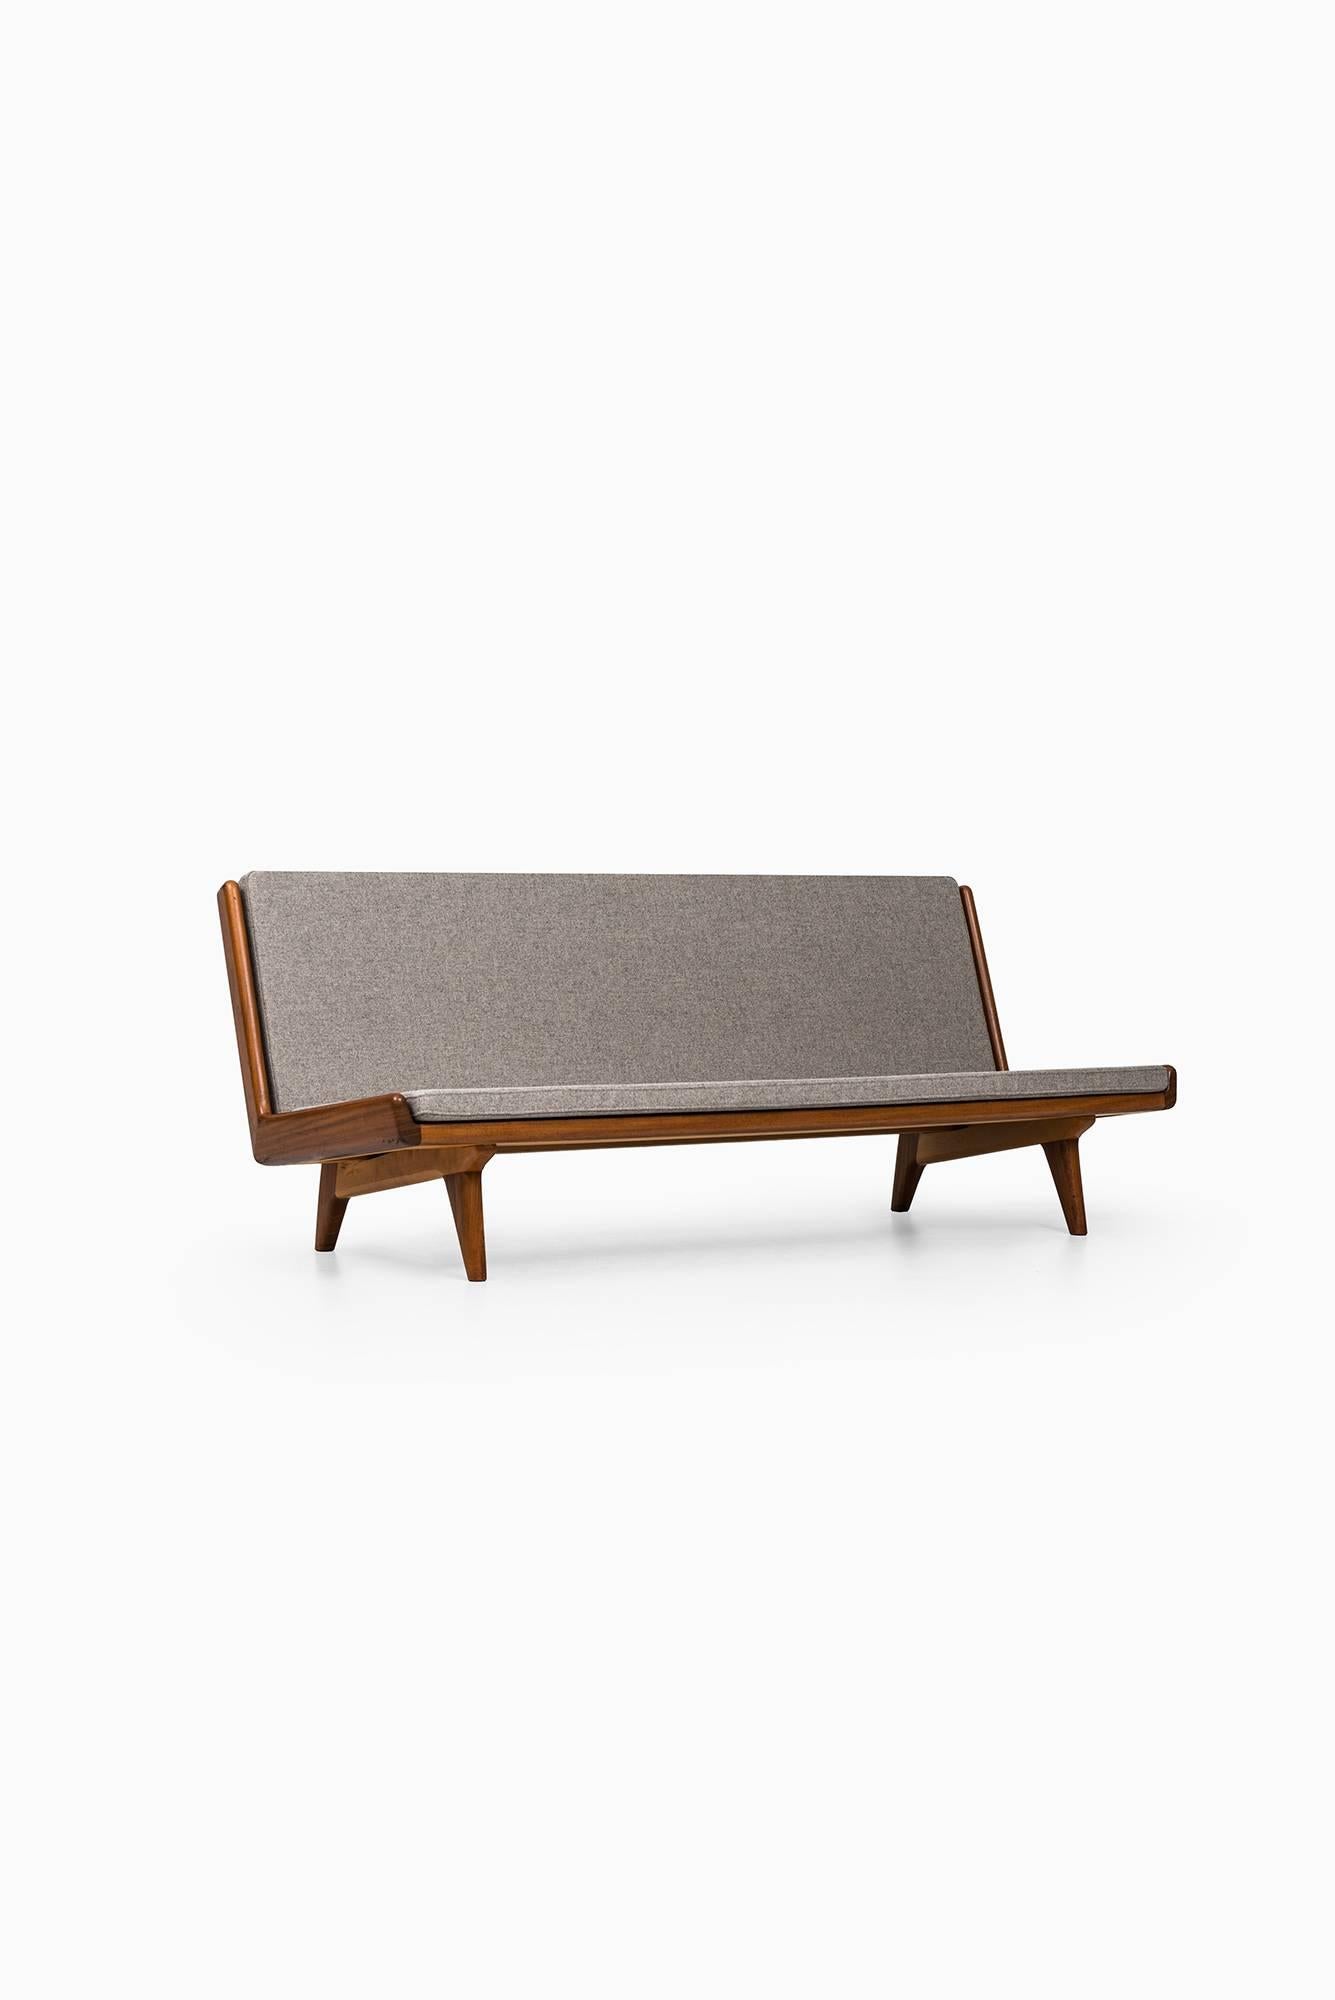 Rare sofa model Trienna designed by Carl Gustaf Hiort af Ornäs. Produced in Finland.